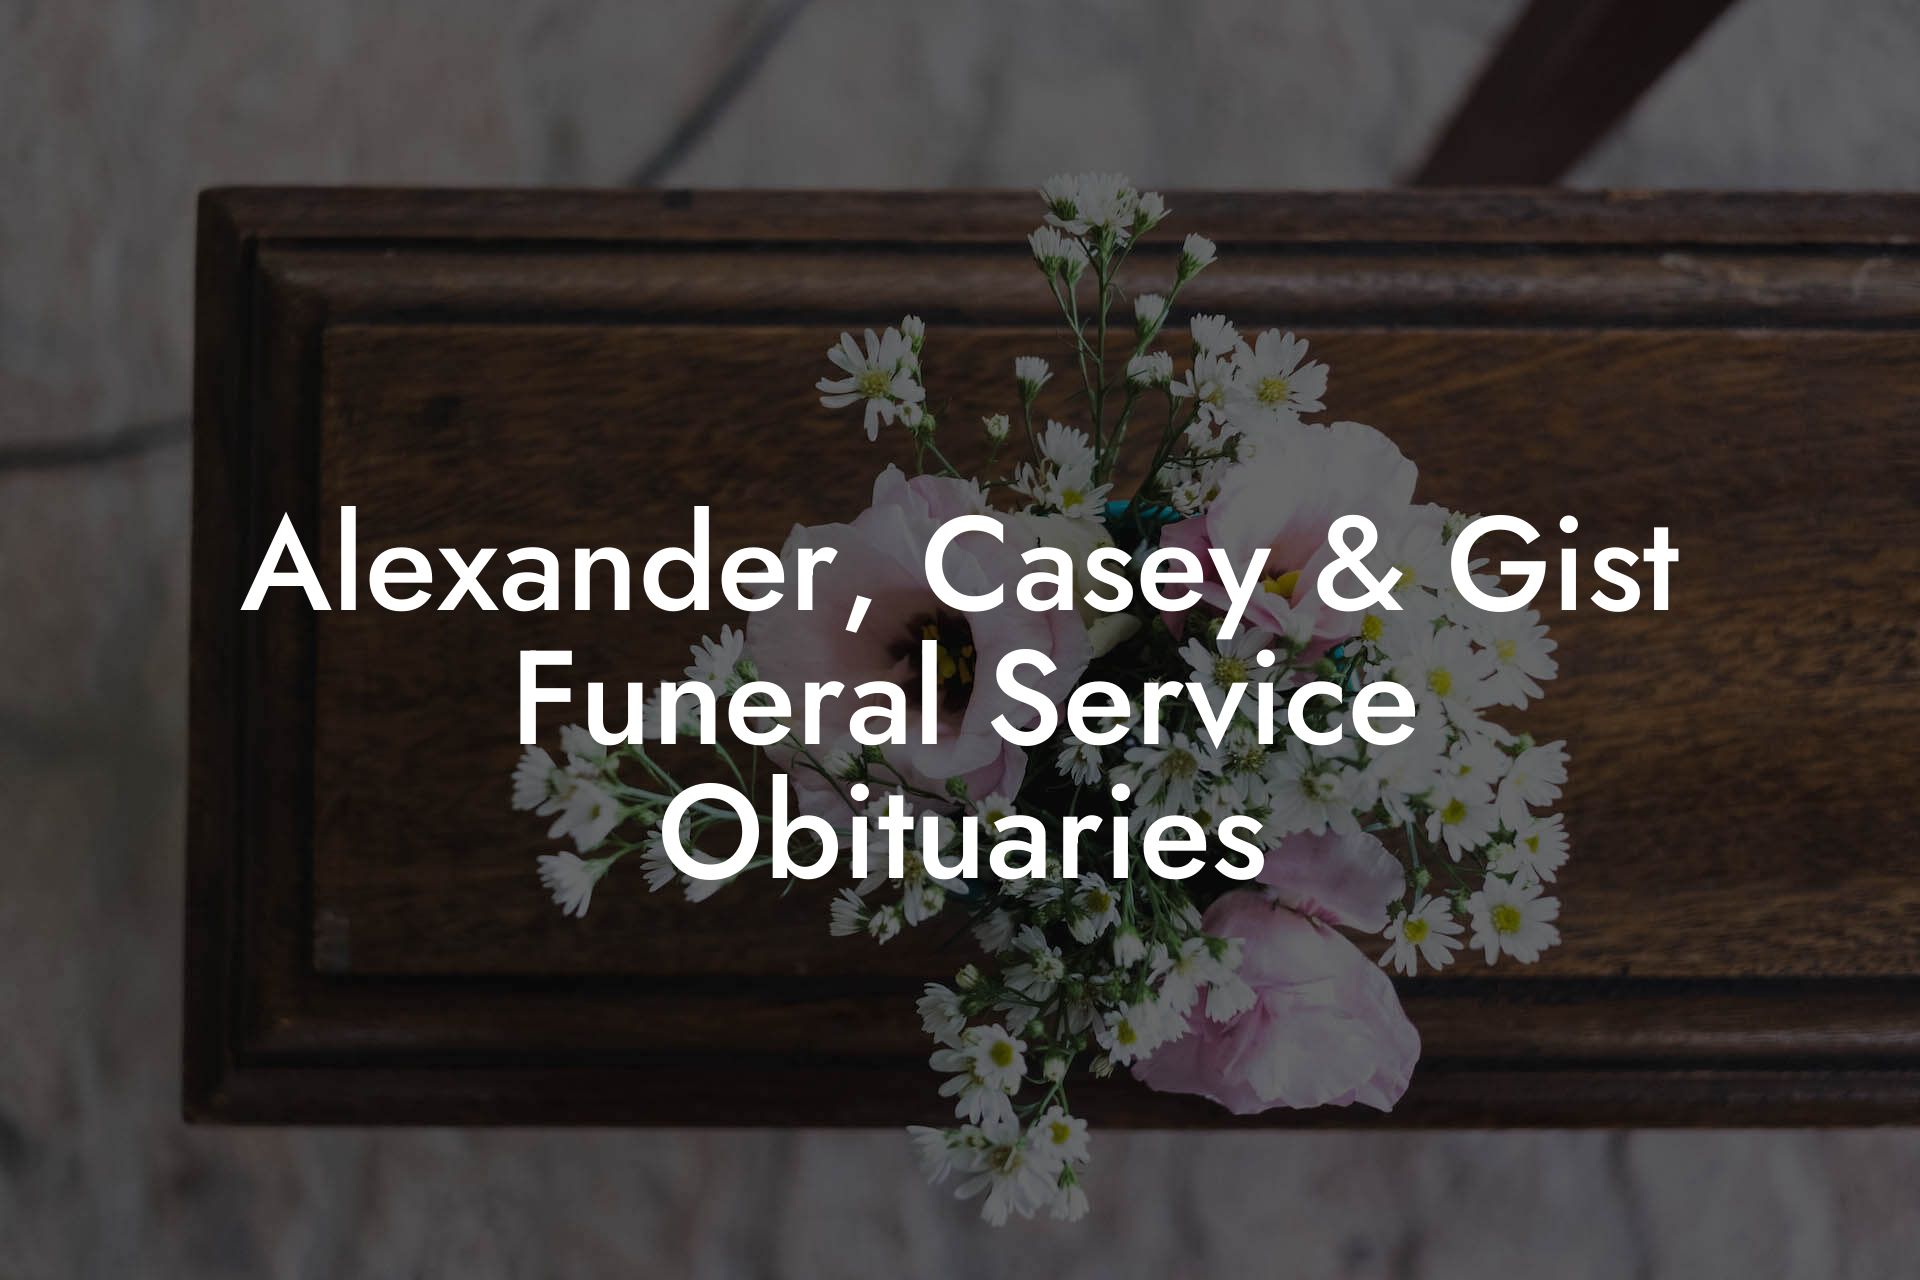 Alexander, Casey & Gist Funeral Service Obituaries